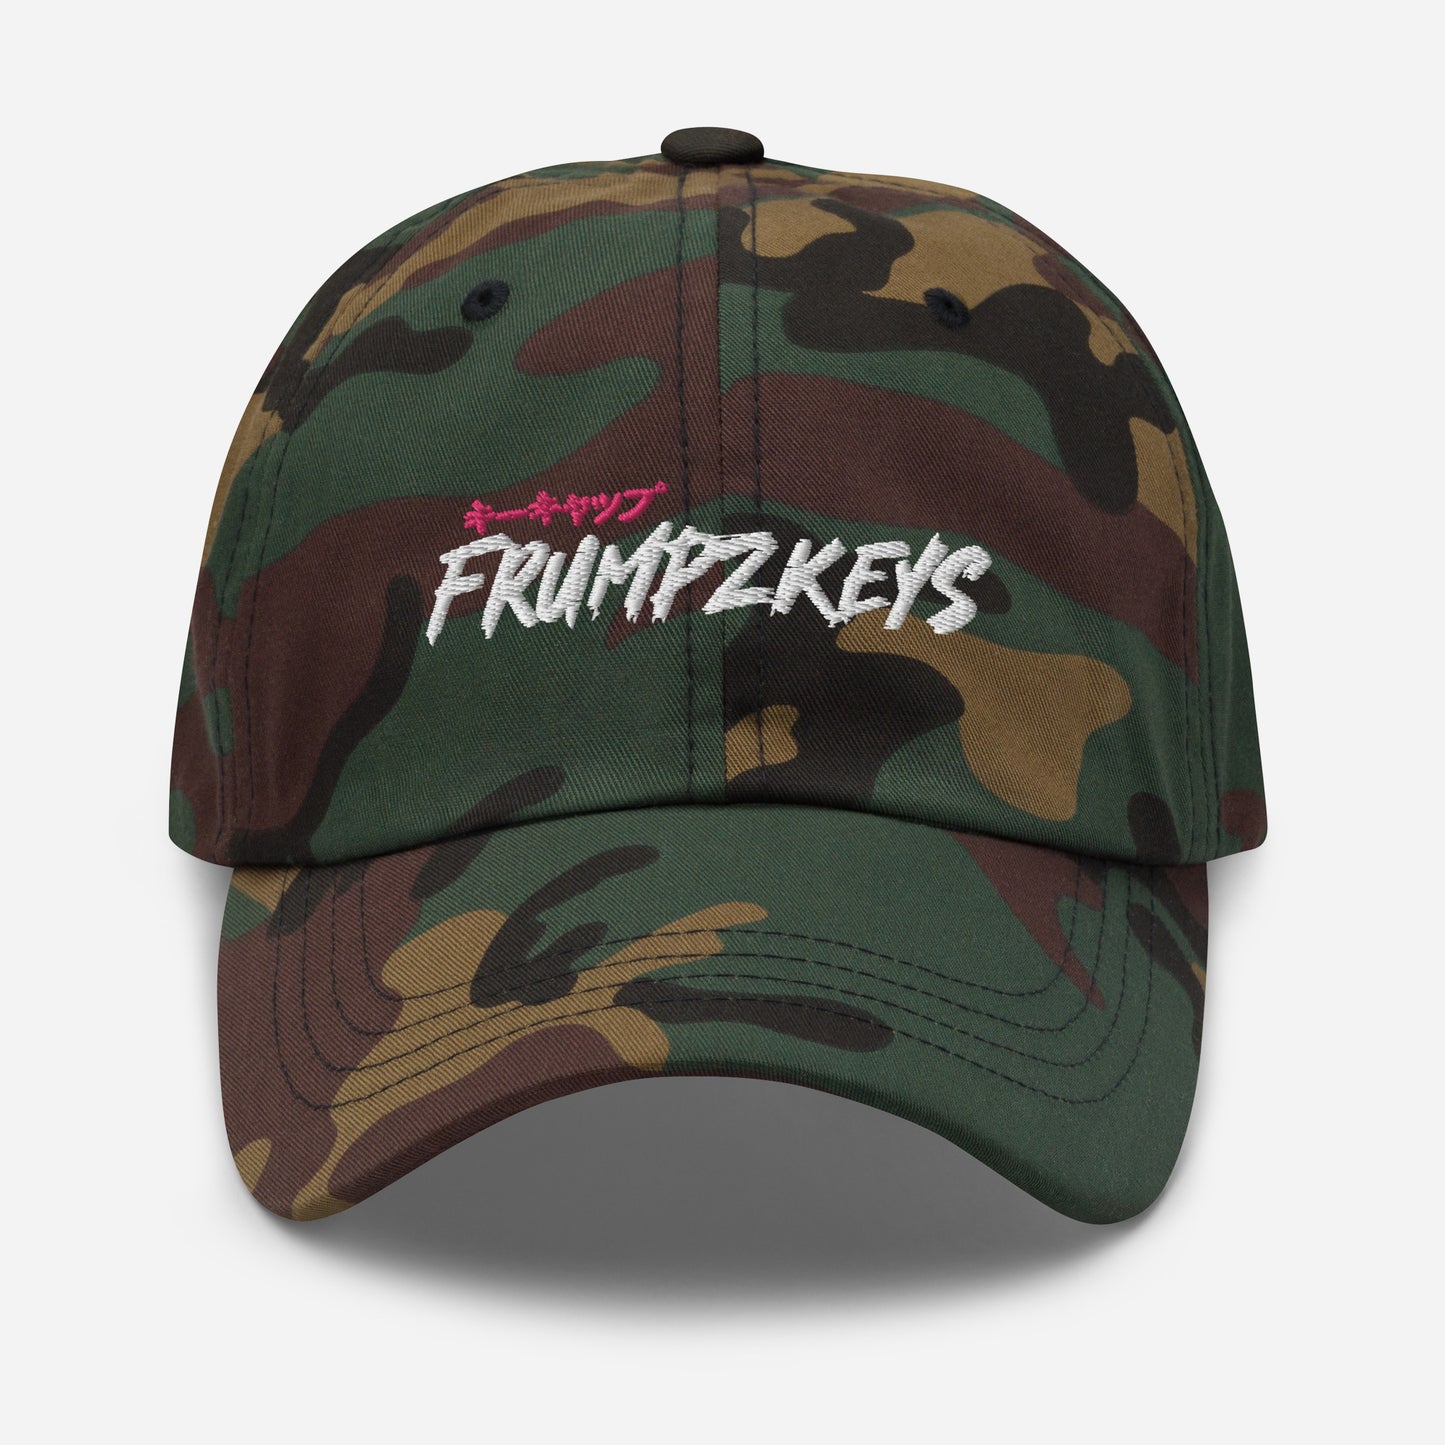 FRUMPZKEYS Dad Hat